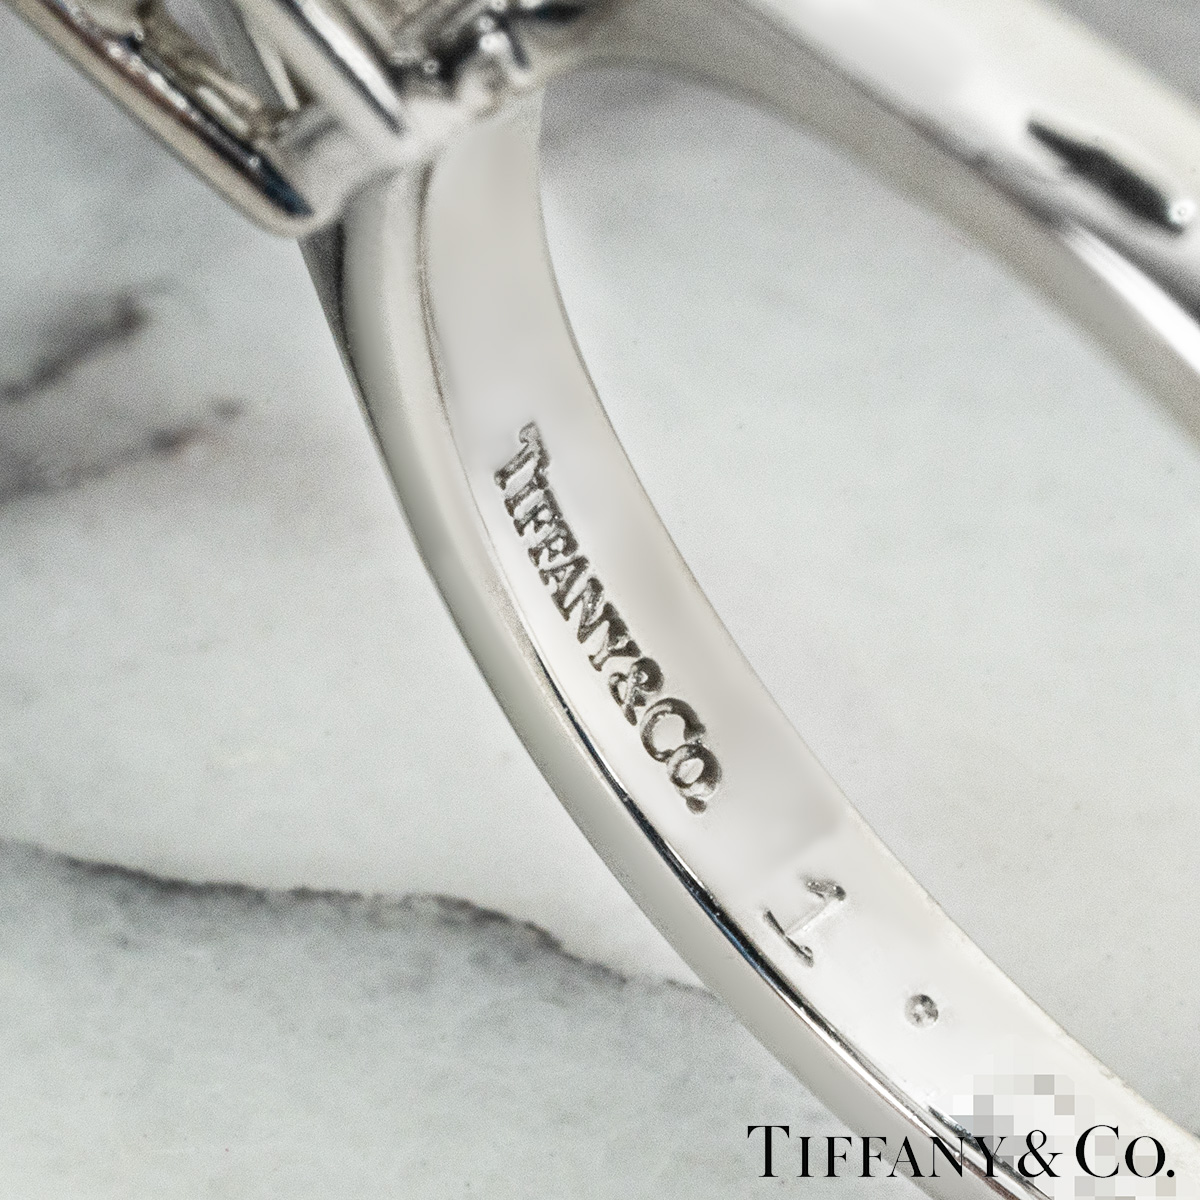 Tiffany & Co. Platinum Emerald Cut Diamond Ring 1.02ct I/VVS2 | Rich ...